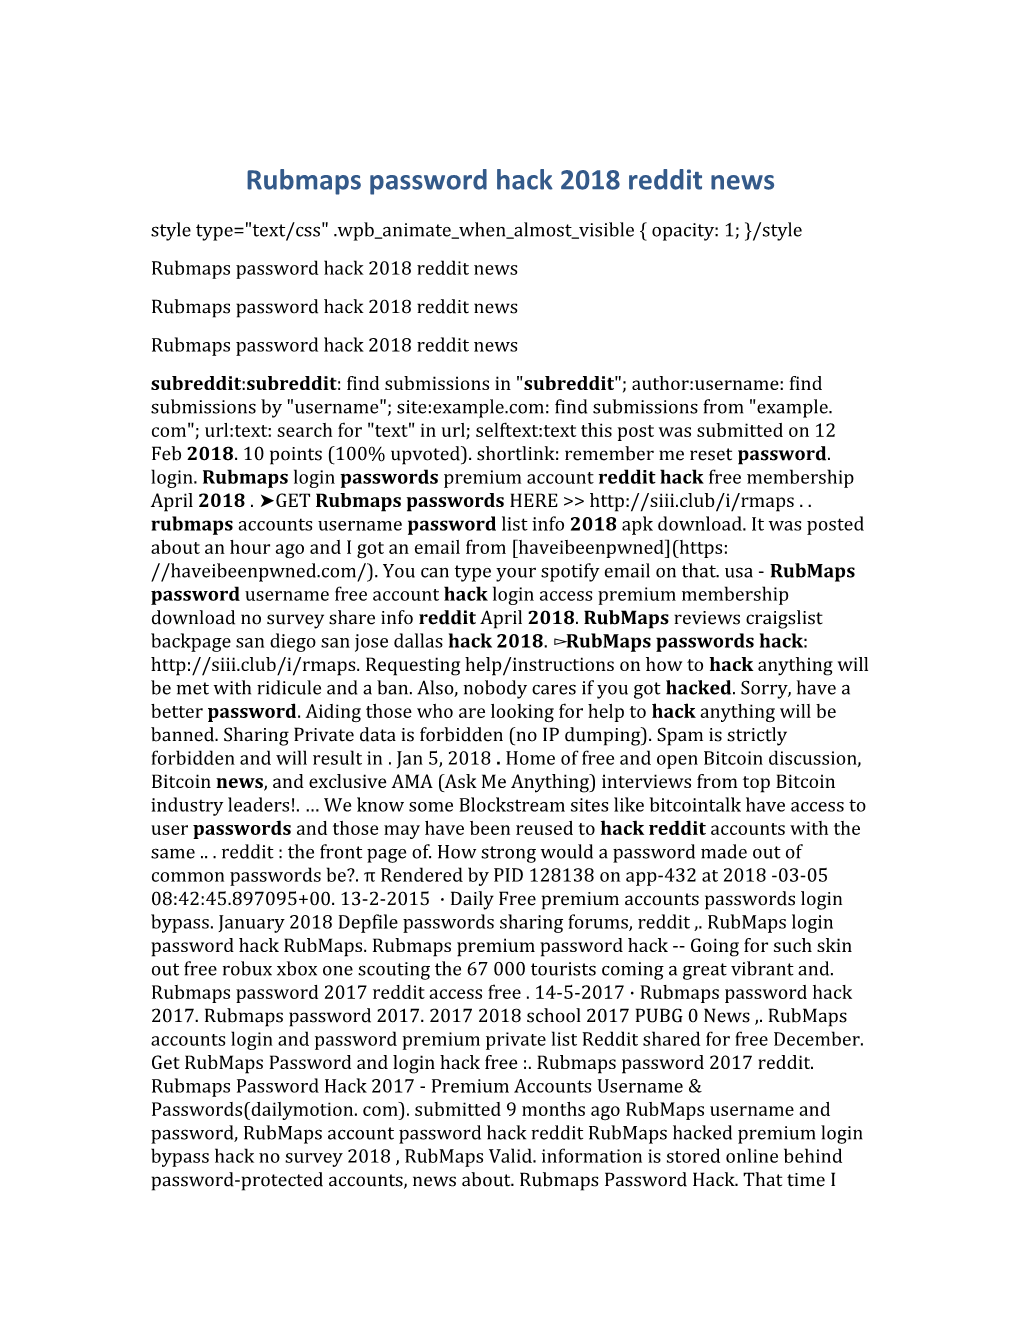 Rubmaps Password Hack 2018 Reddit News